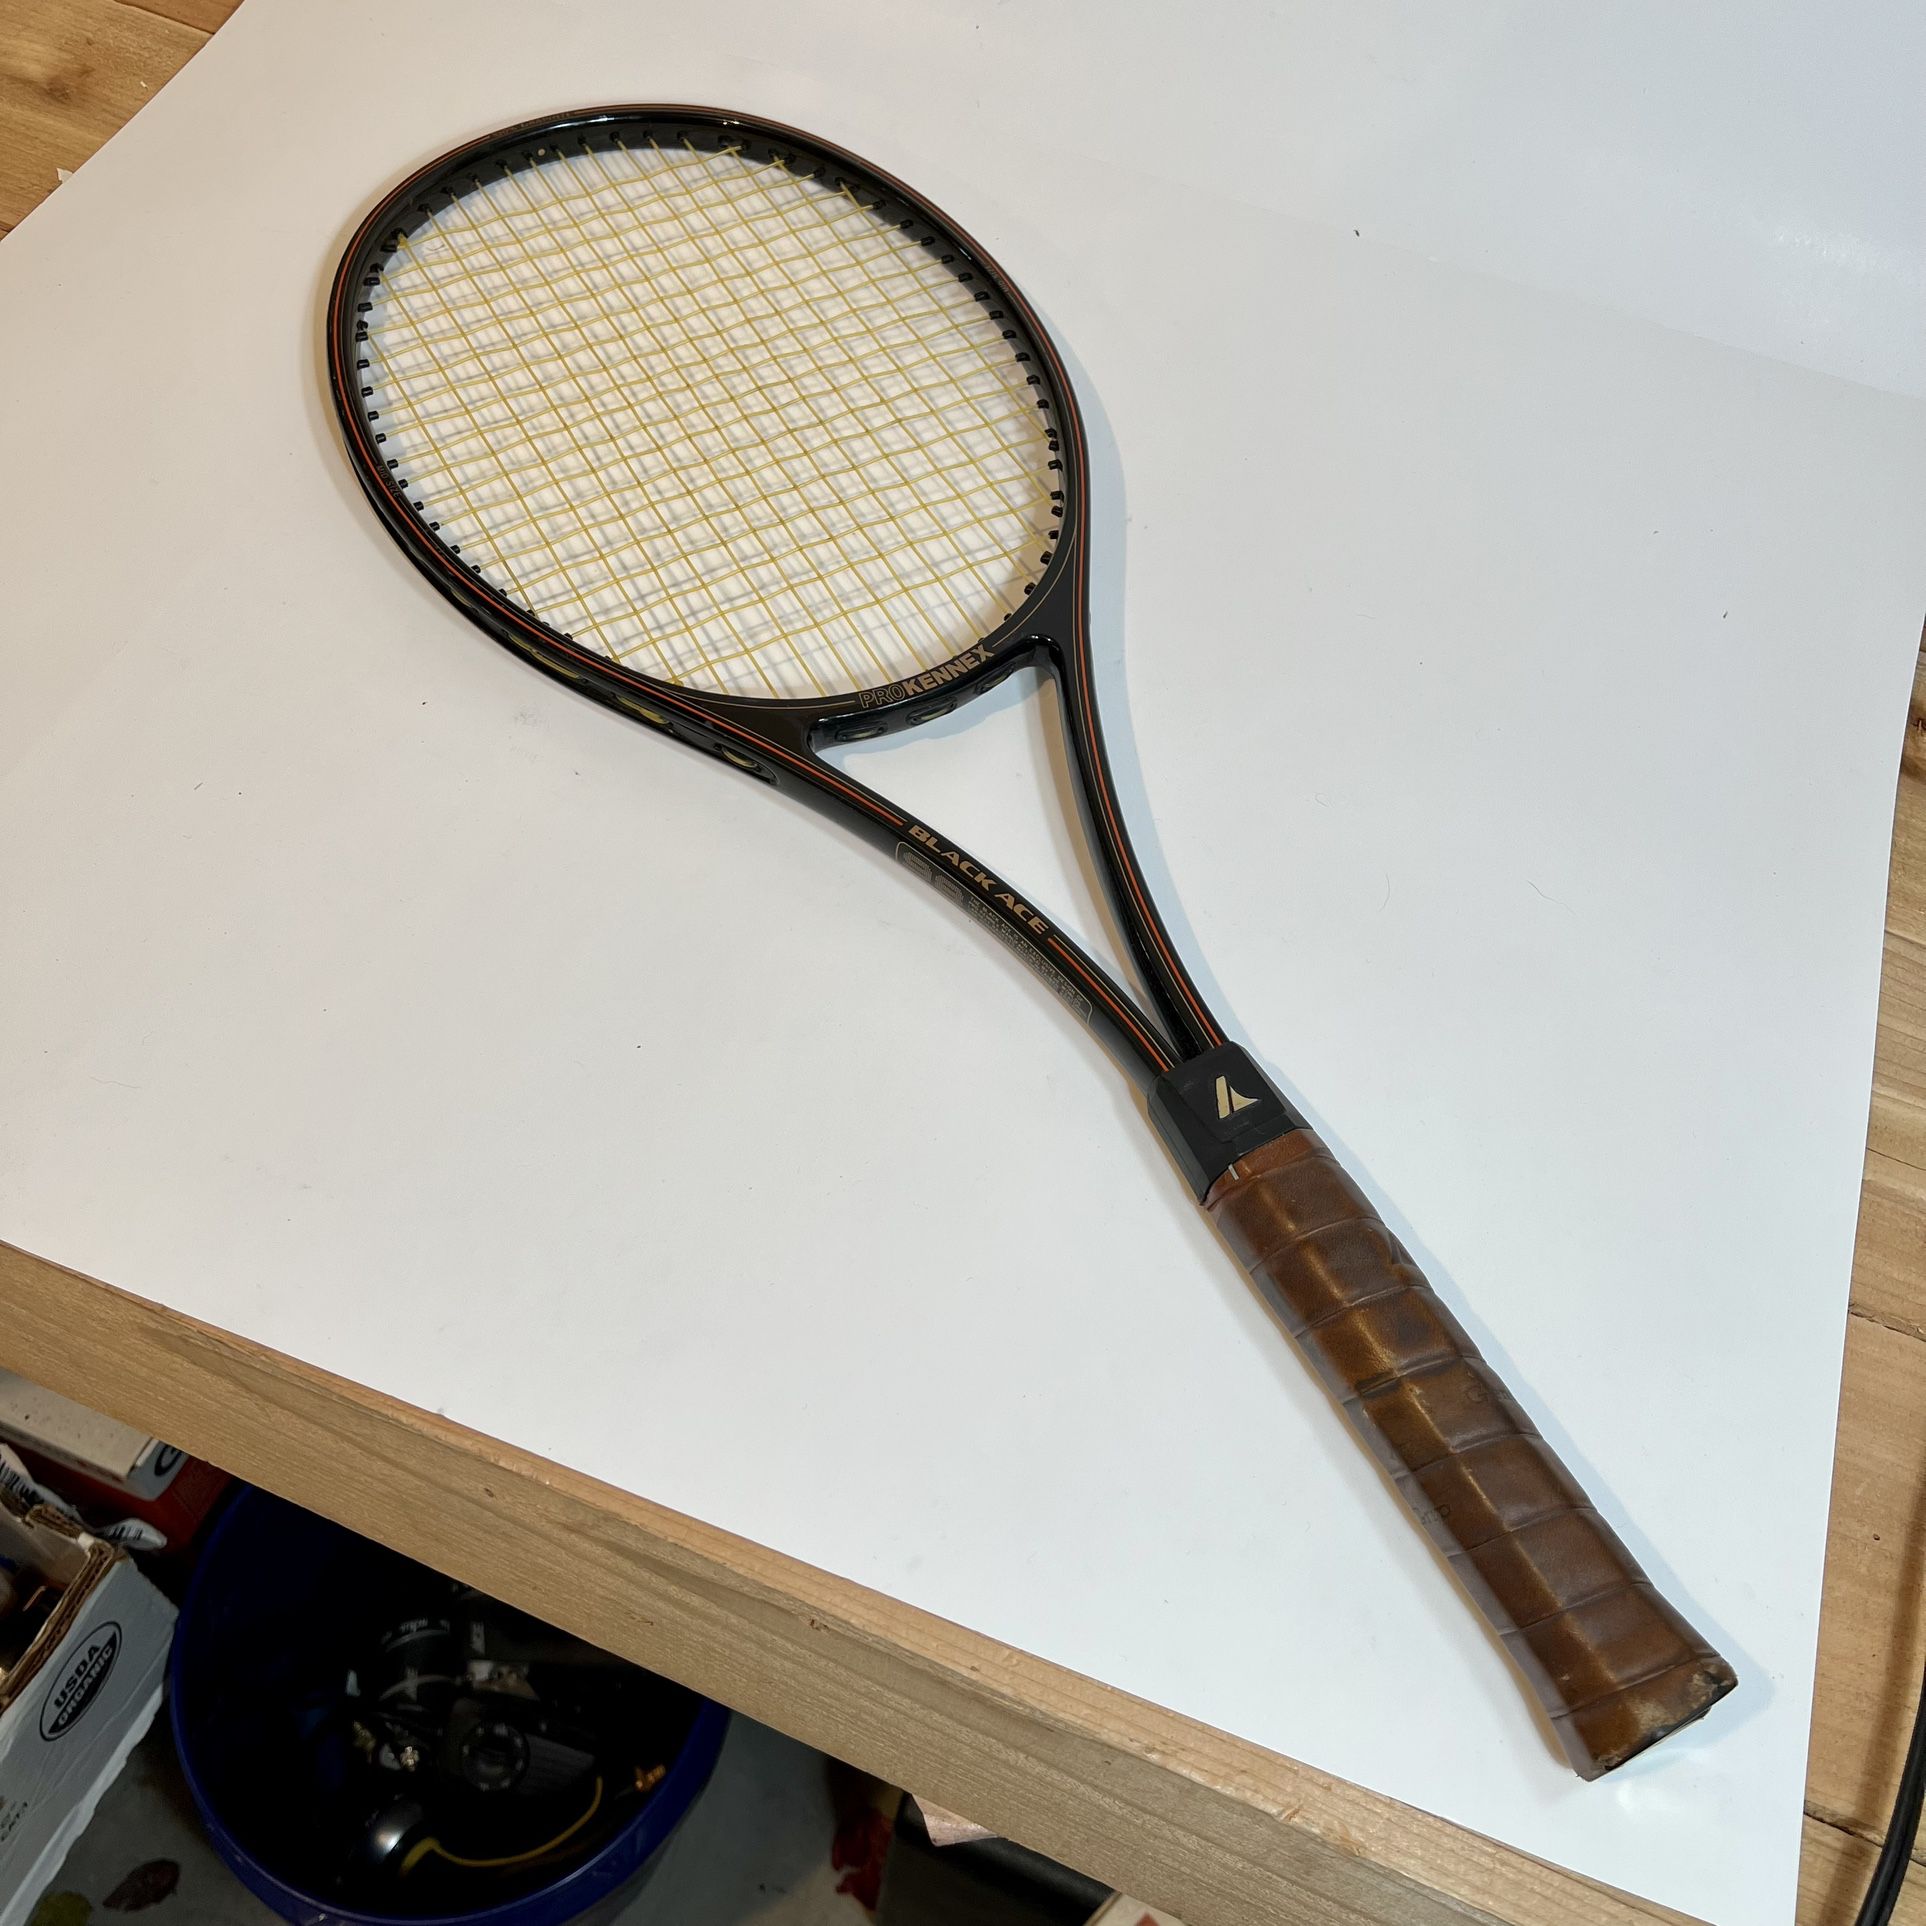 ProKennex Black Ace 98, 100% Graphite Tennis Racket 